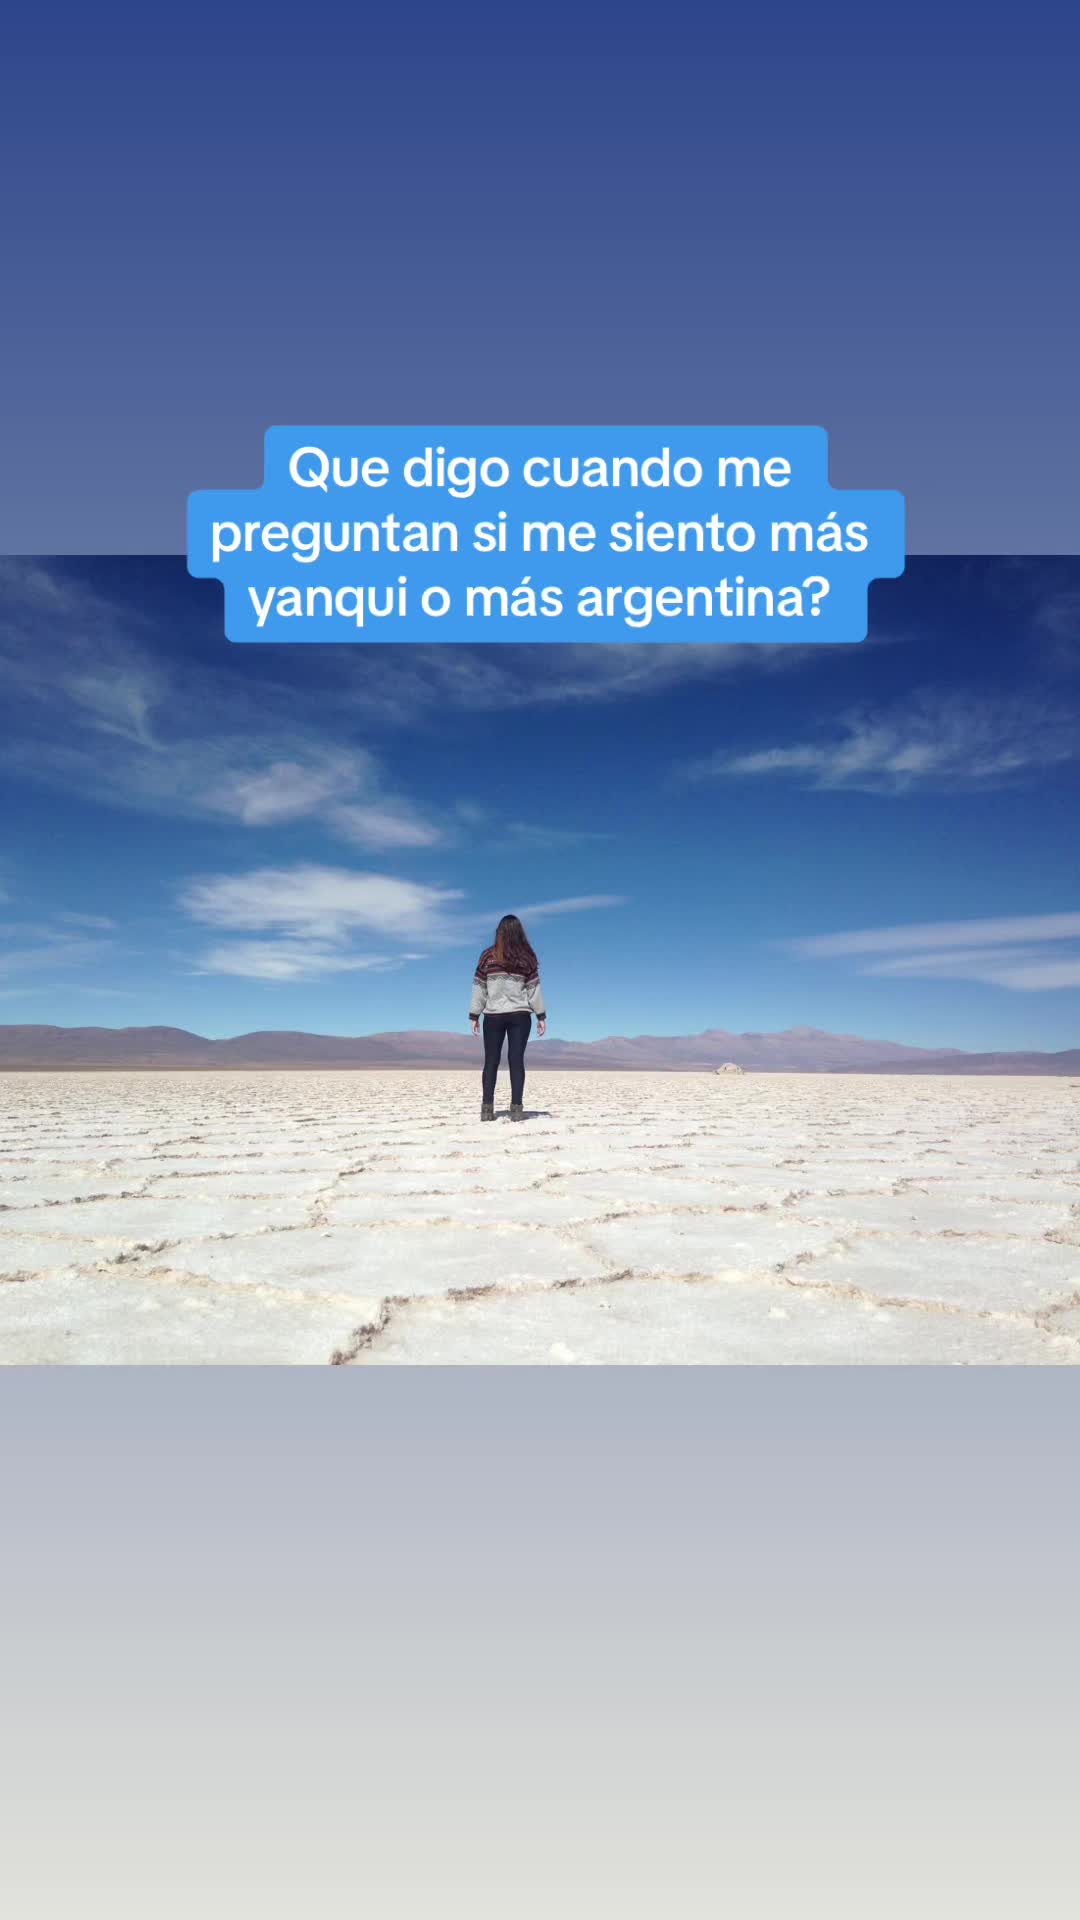 @yanquienargentina